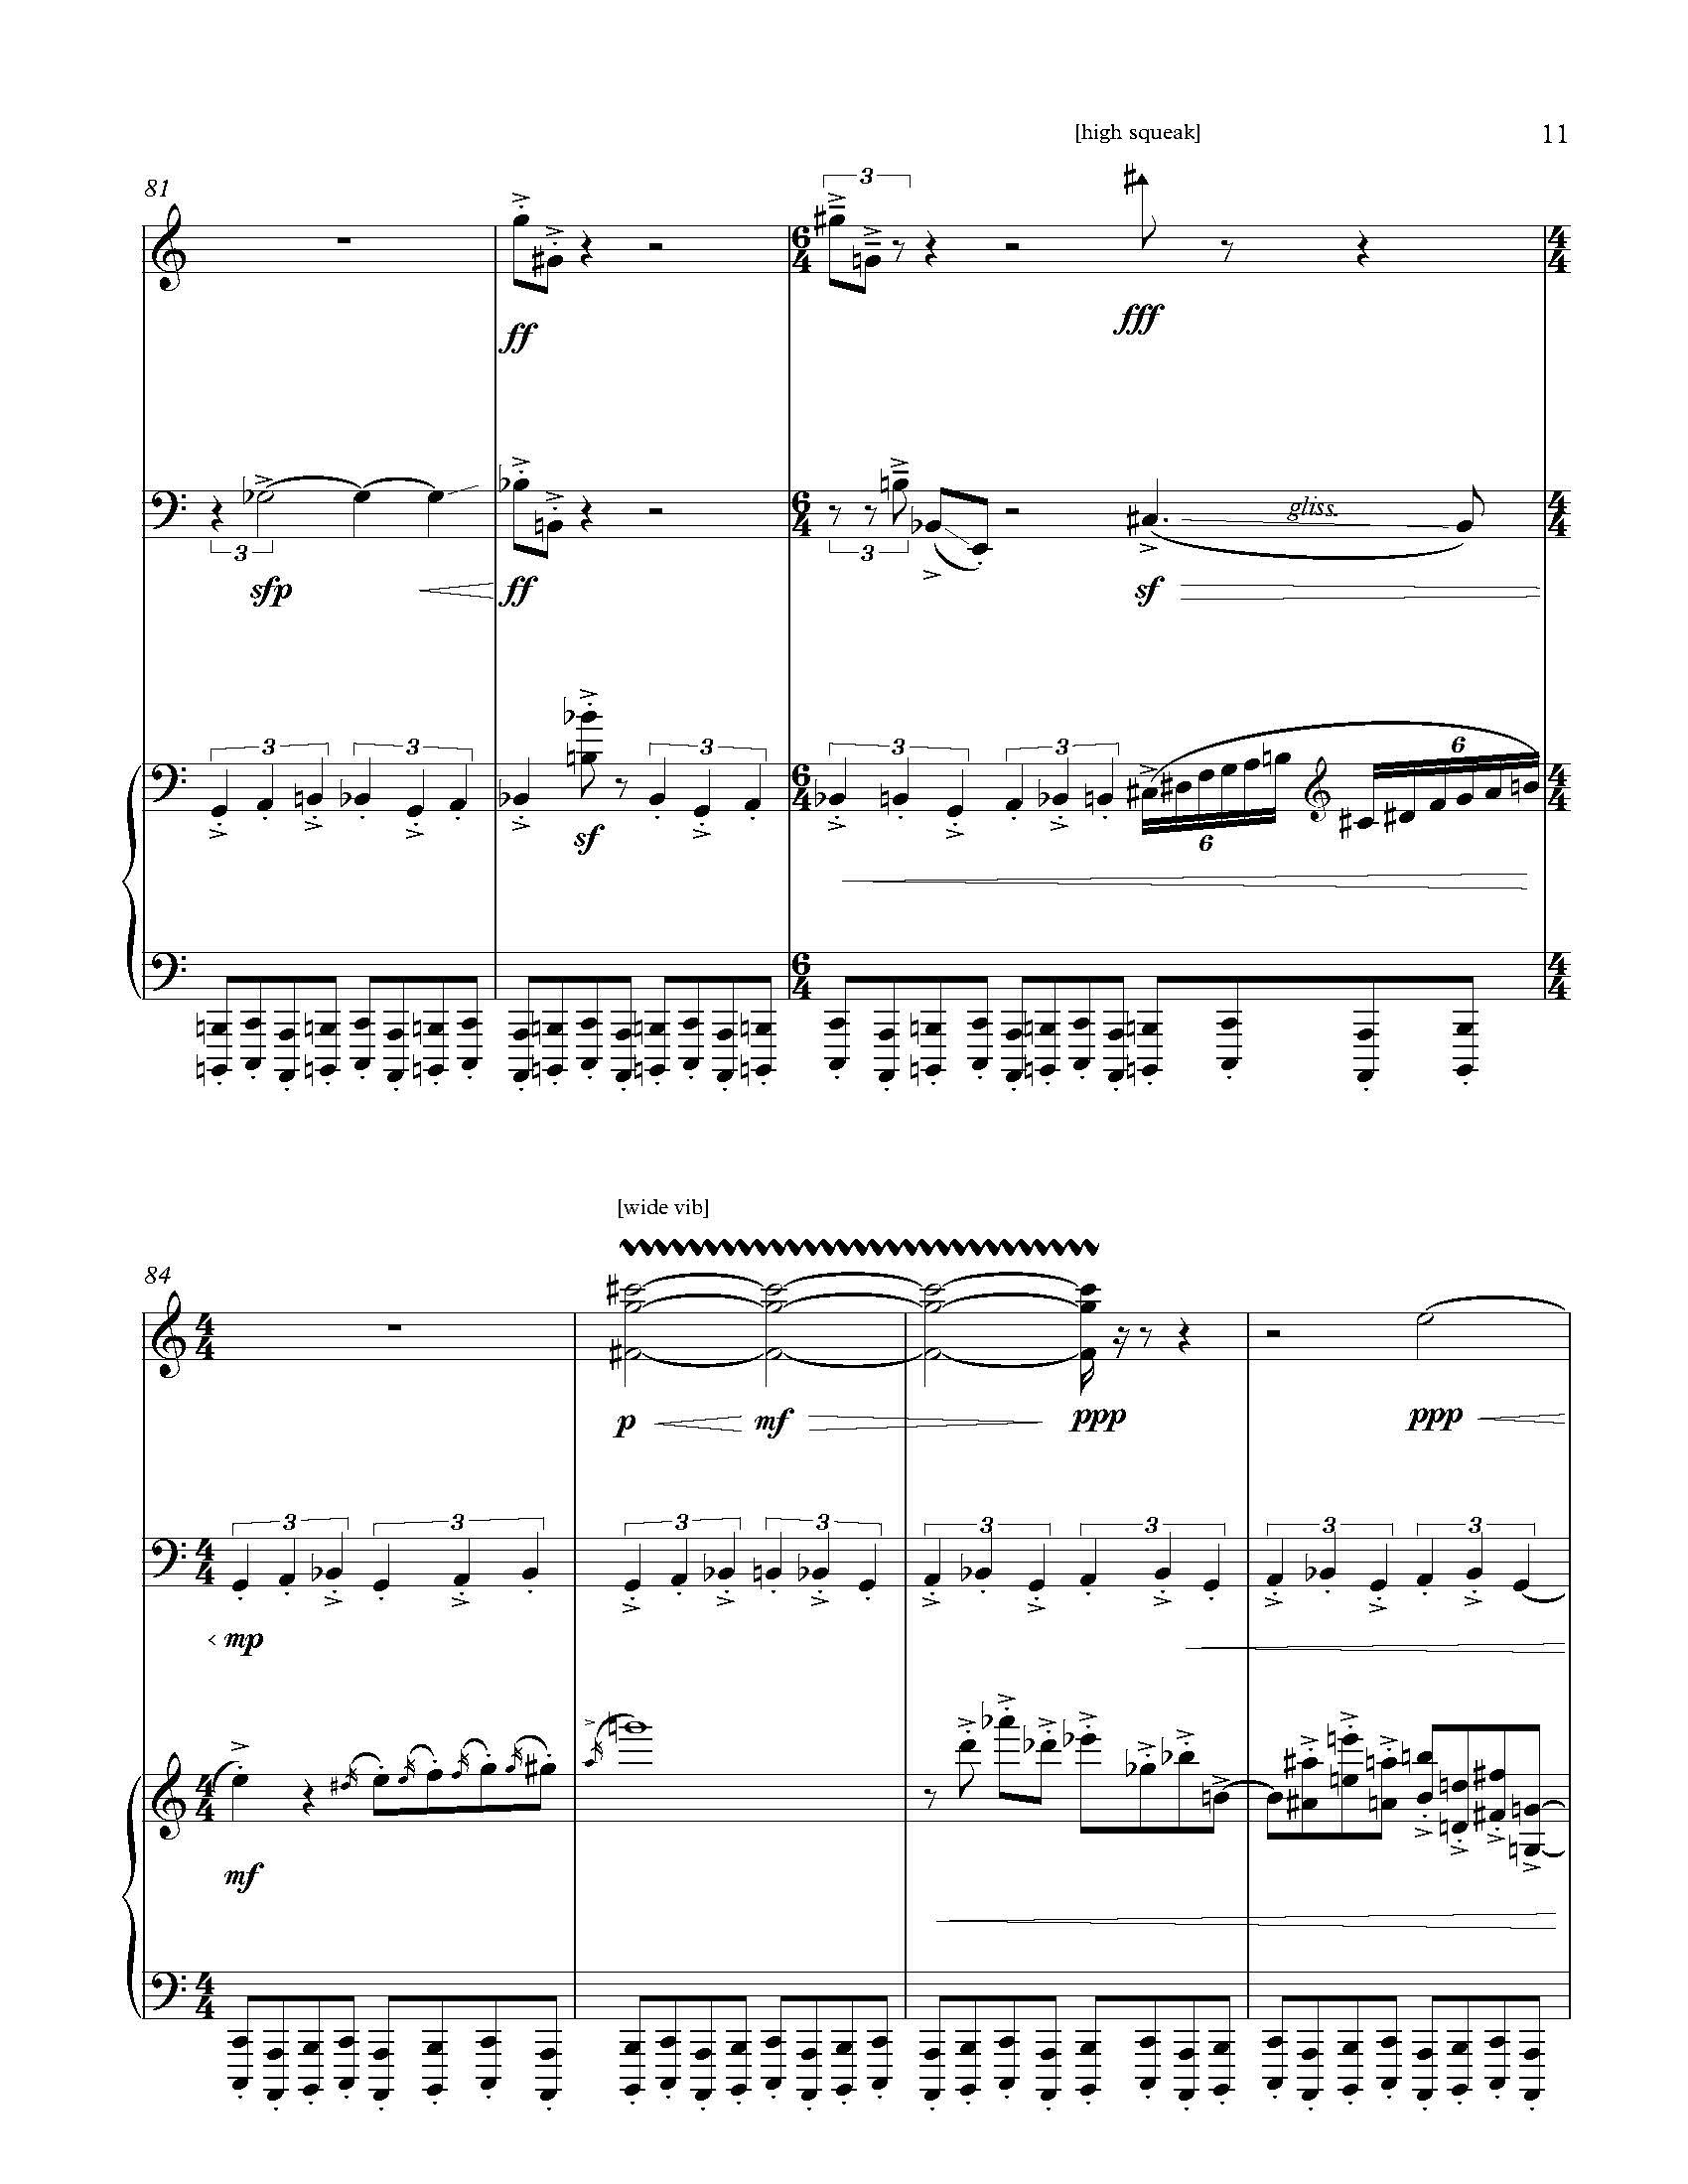 alice + zoltan 4ever - Complete Score_Page_17.jpg